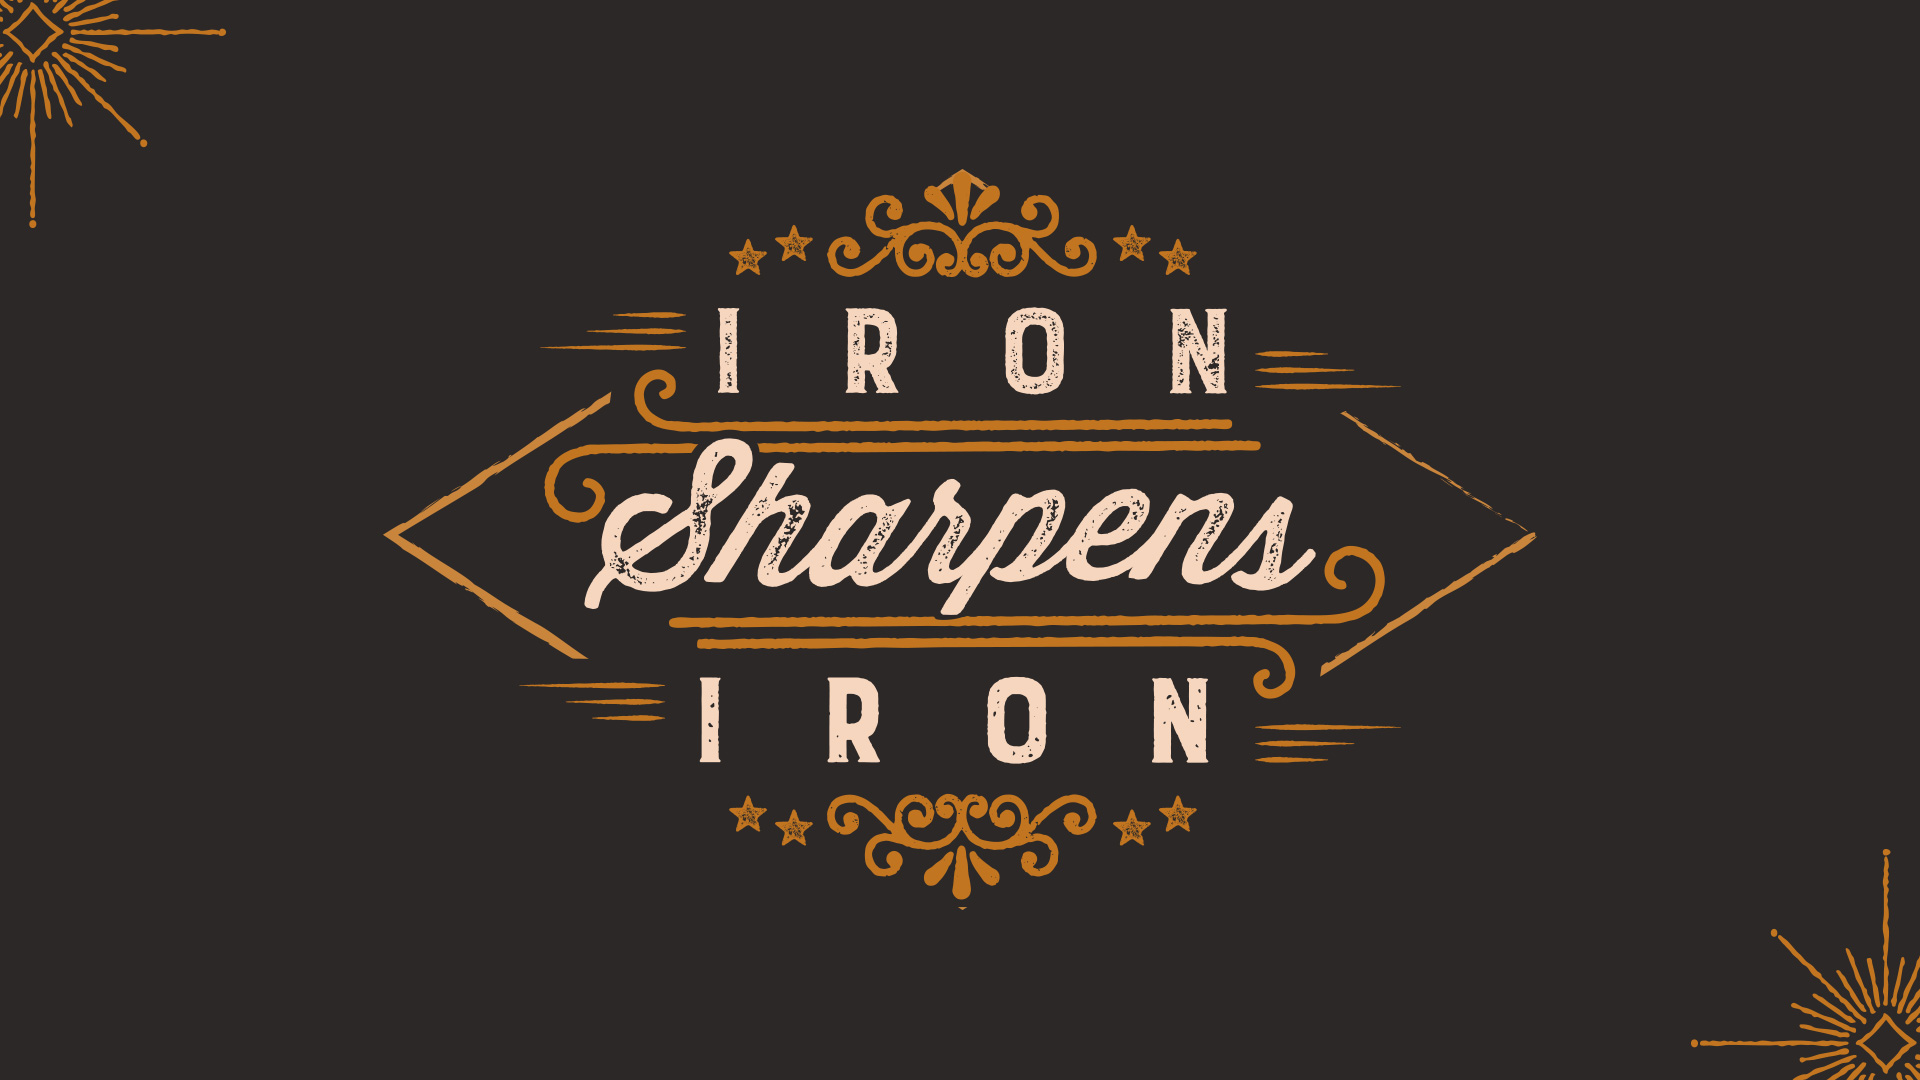 Iron Sharpens Iron Title Image